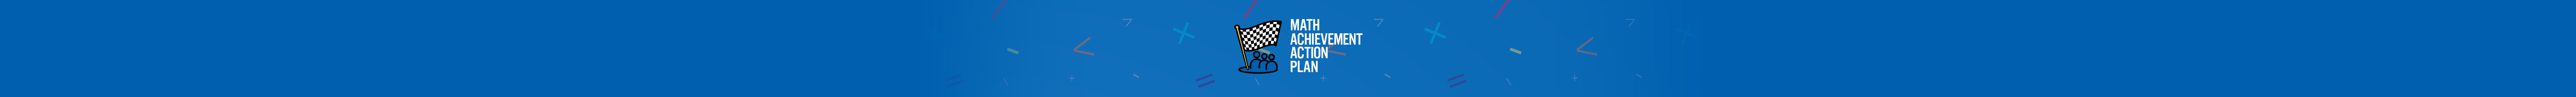 The WRDSB Math Achievement Action Plan